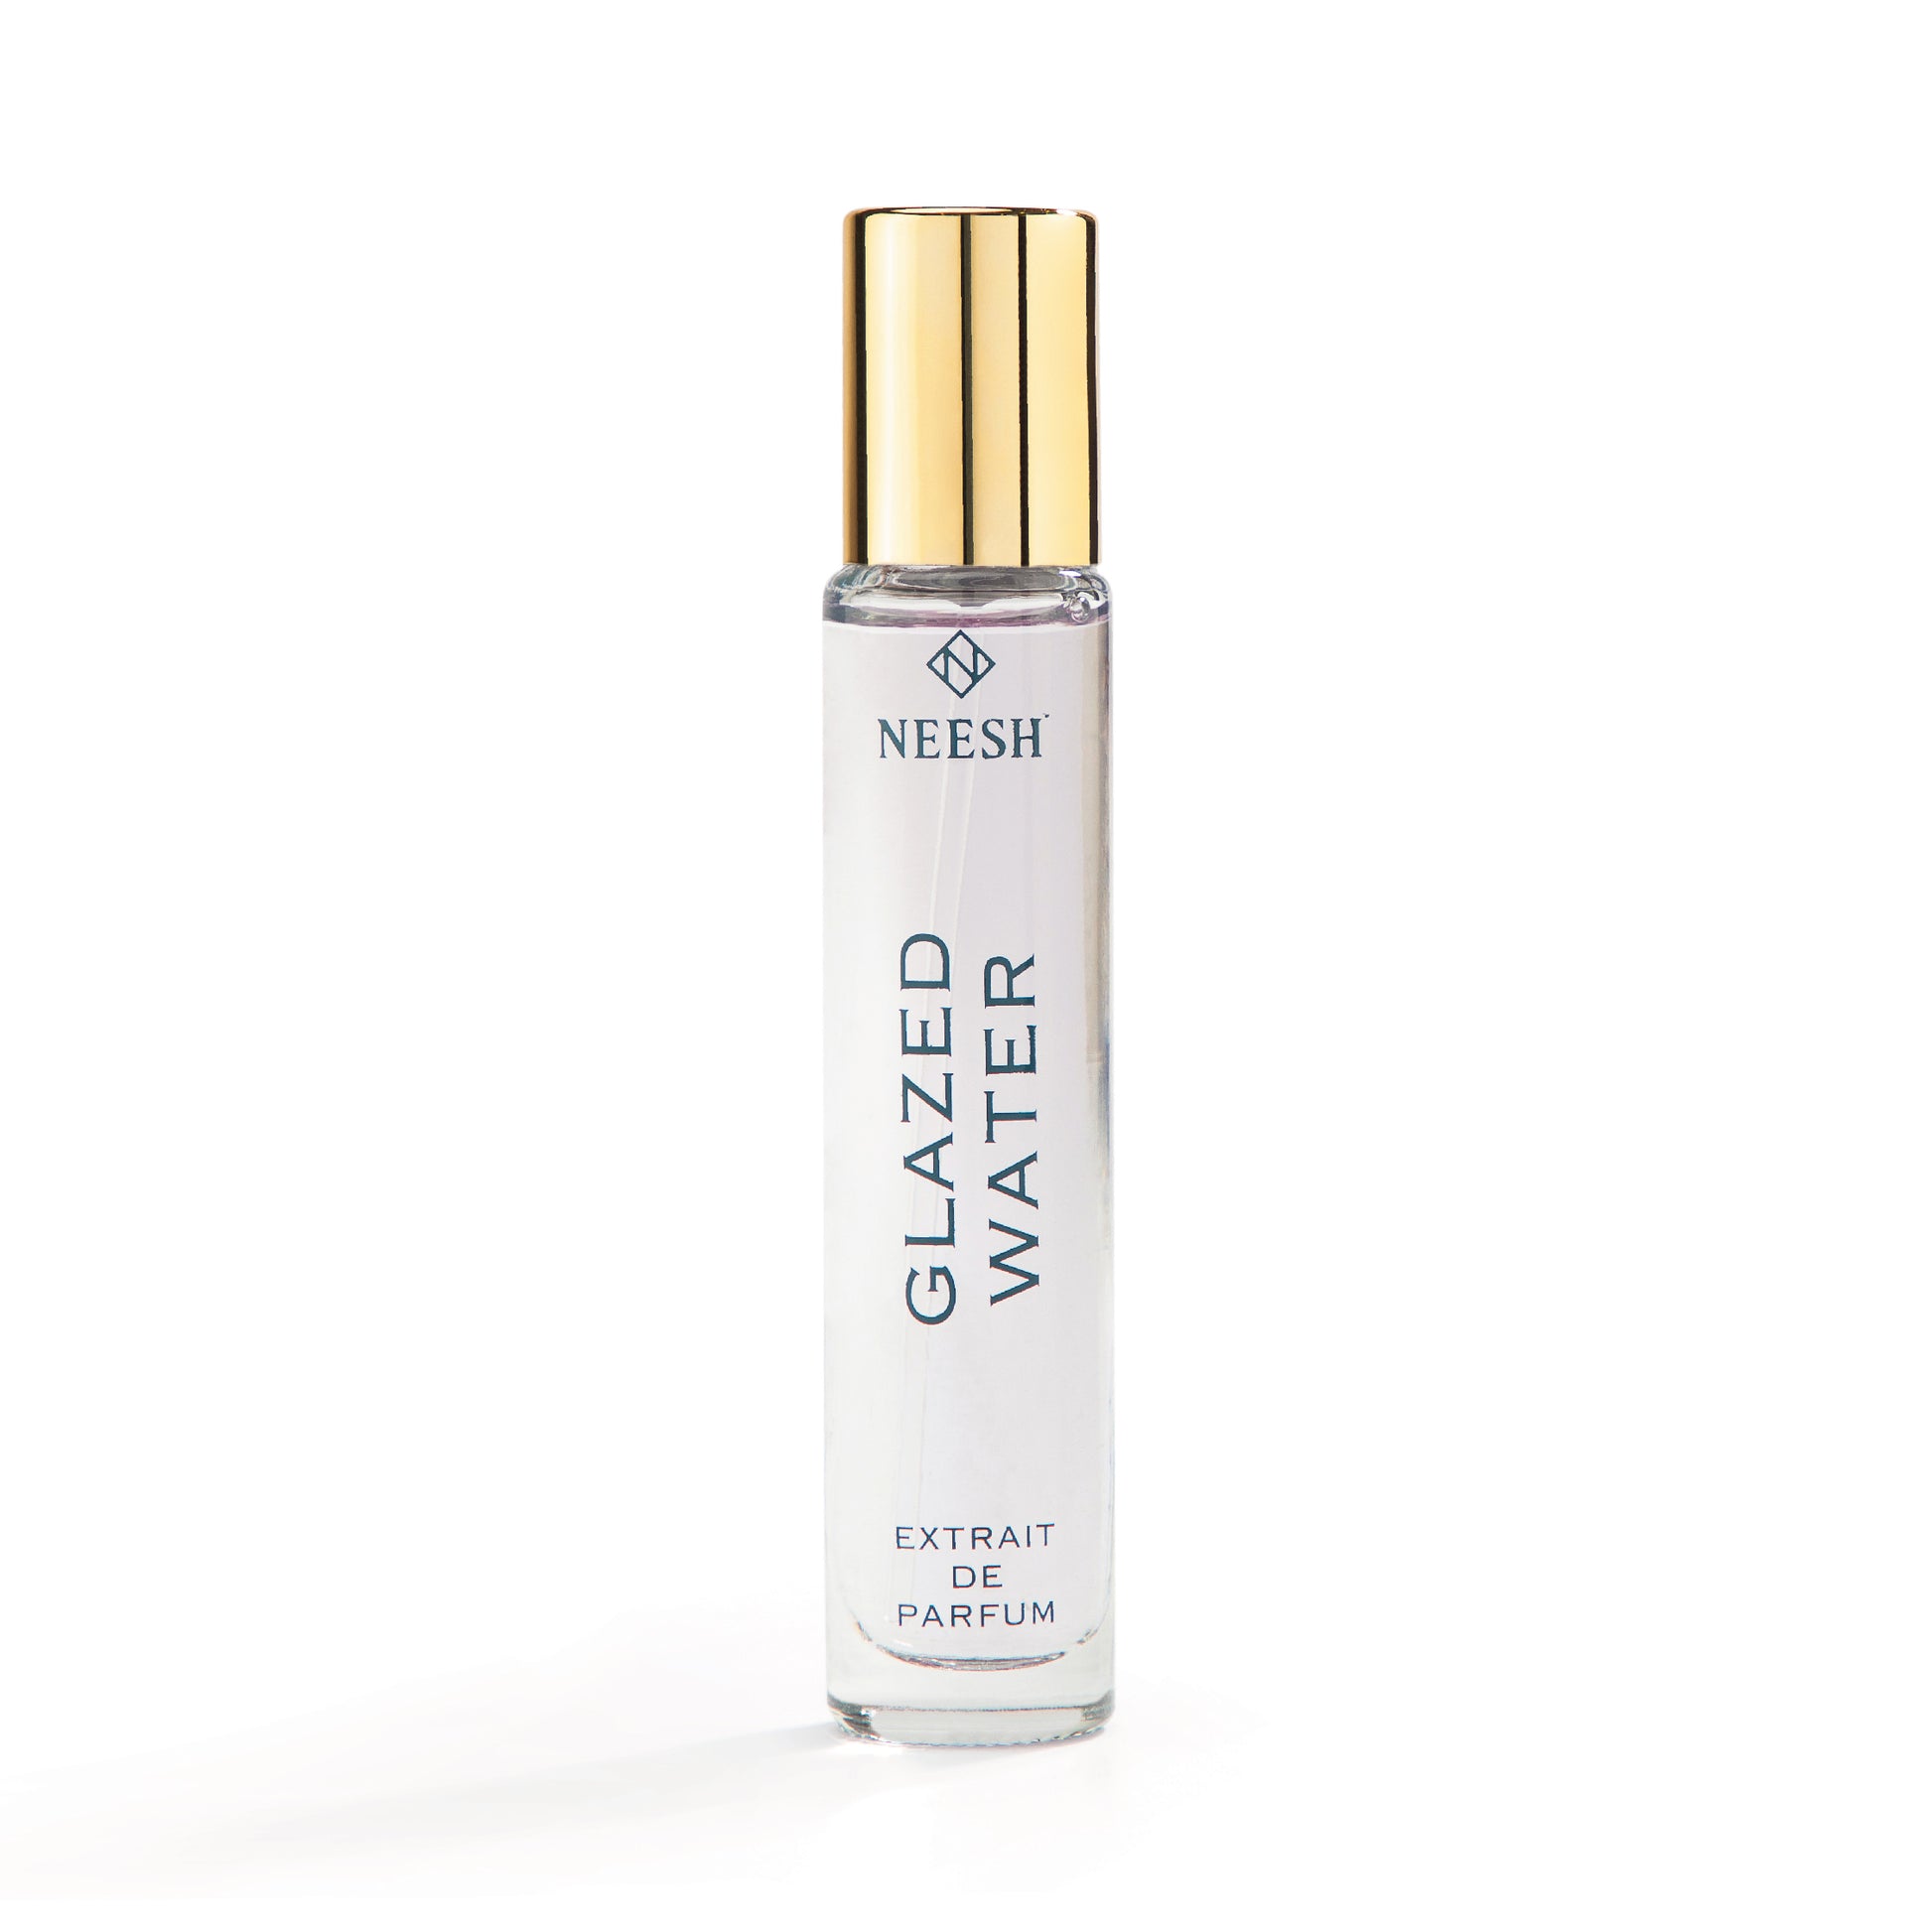 Avon Rare Pearls Eau de Parfume 2 Pack - 1.7 fl. oz. - Women Parfum Natural  Spray 